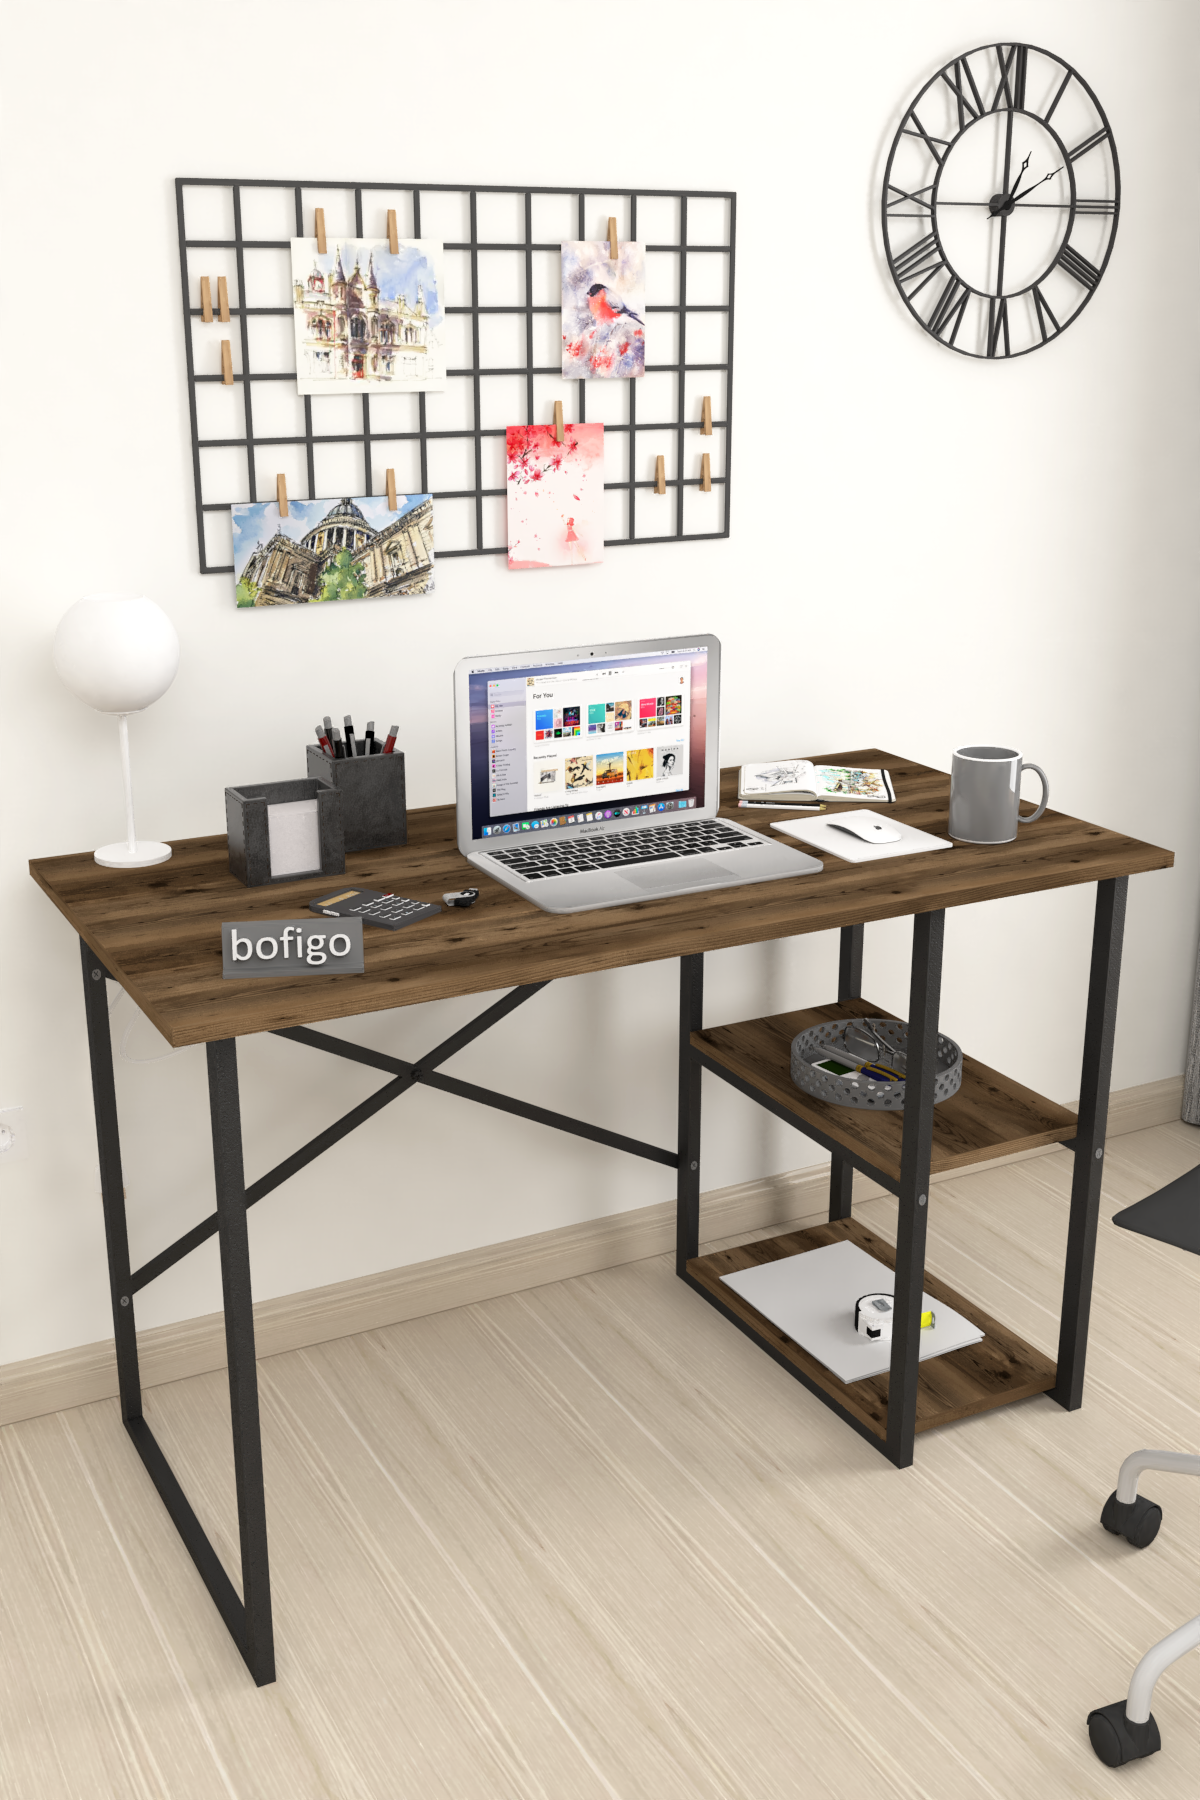 Bofigo 2 Shelf Study Desk 60x120 cm  Lidya